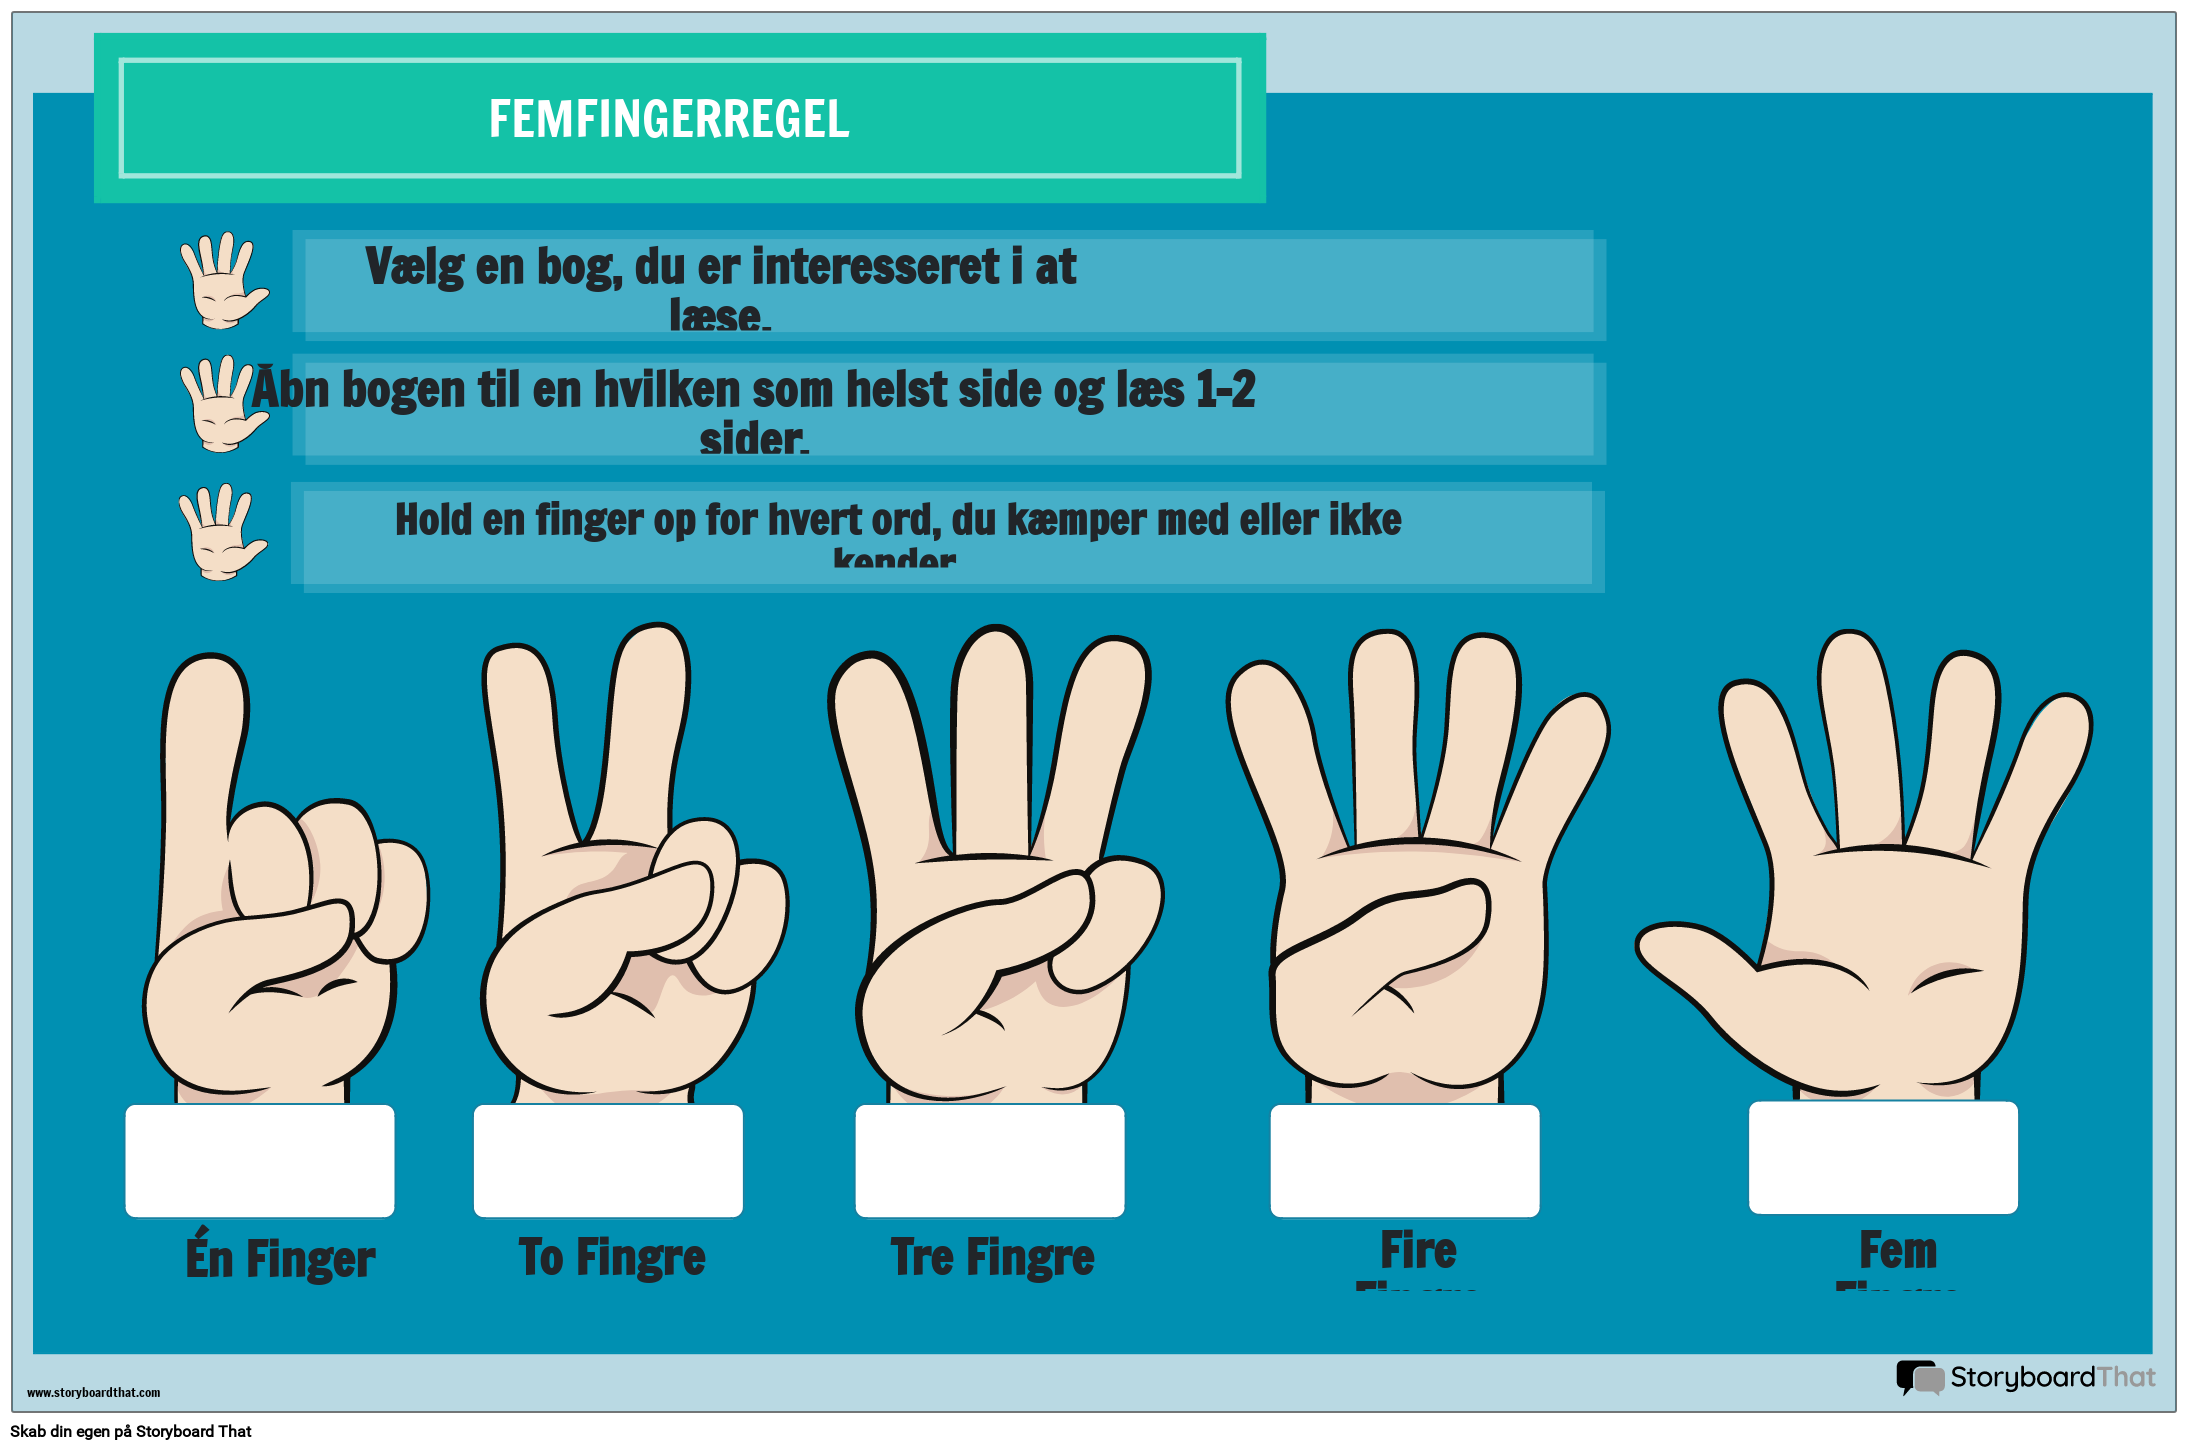 5 Finger Rule - Just Right Bogplakat